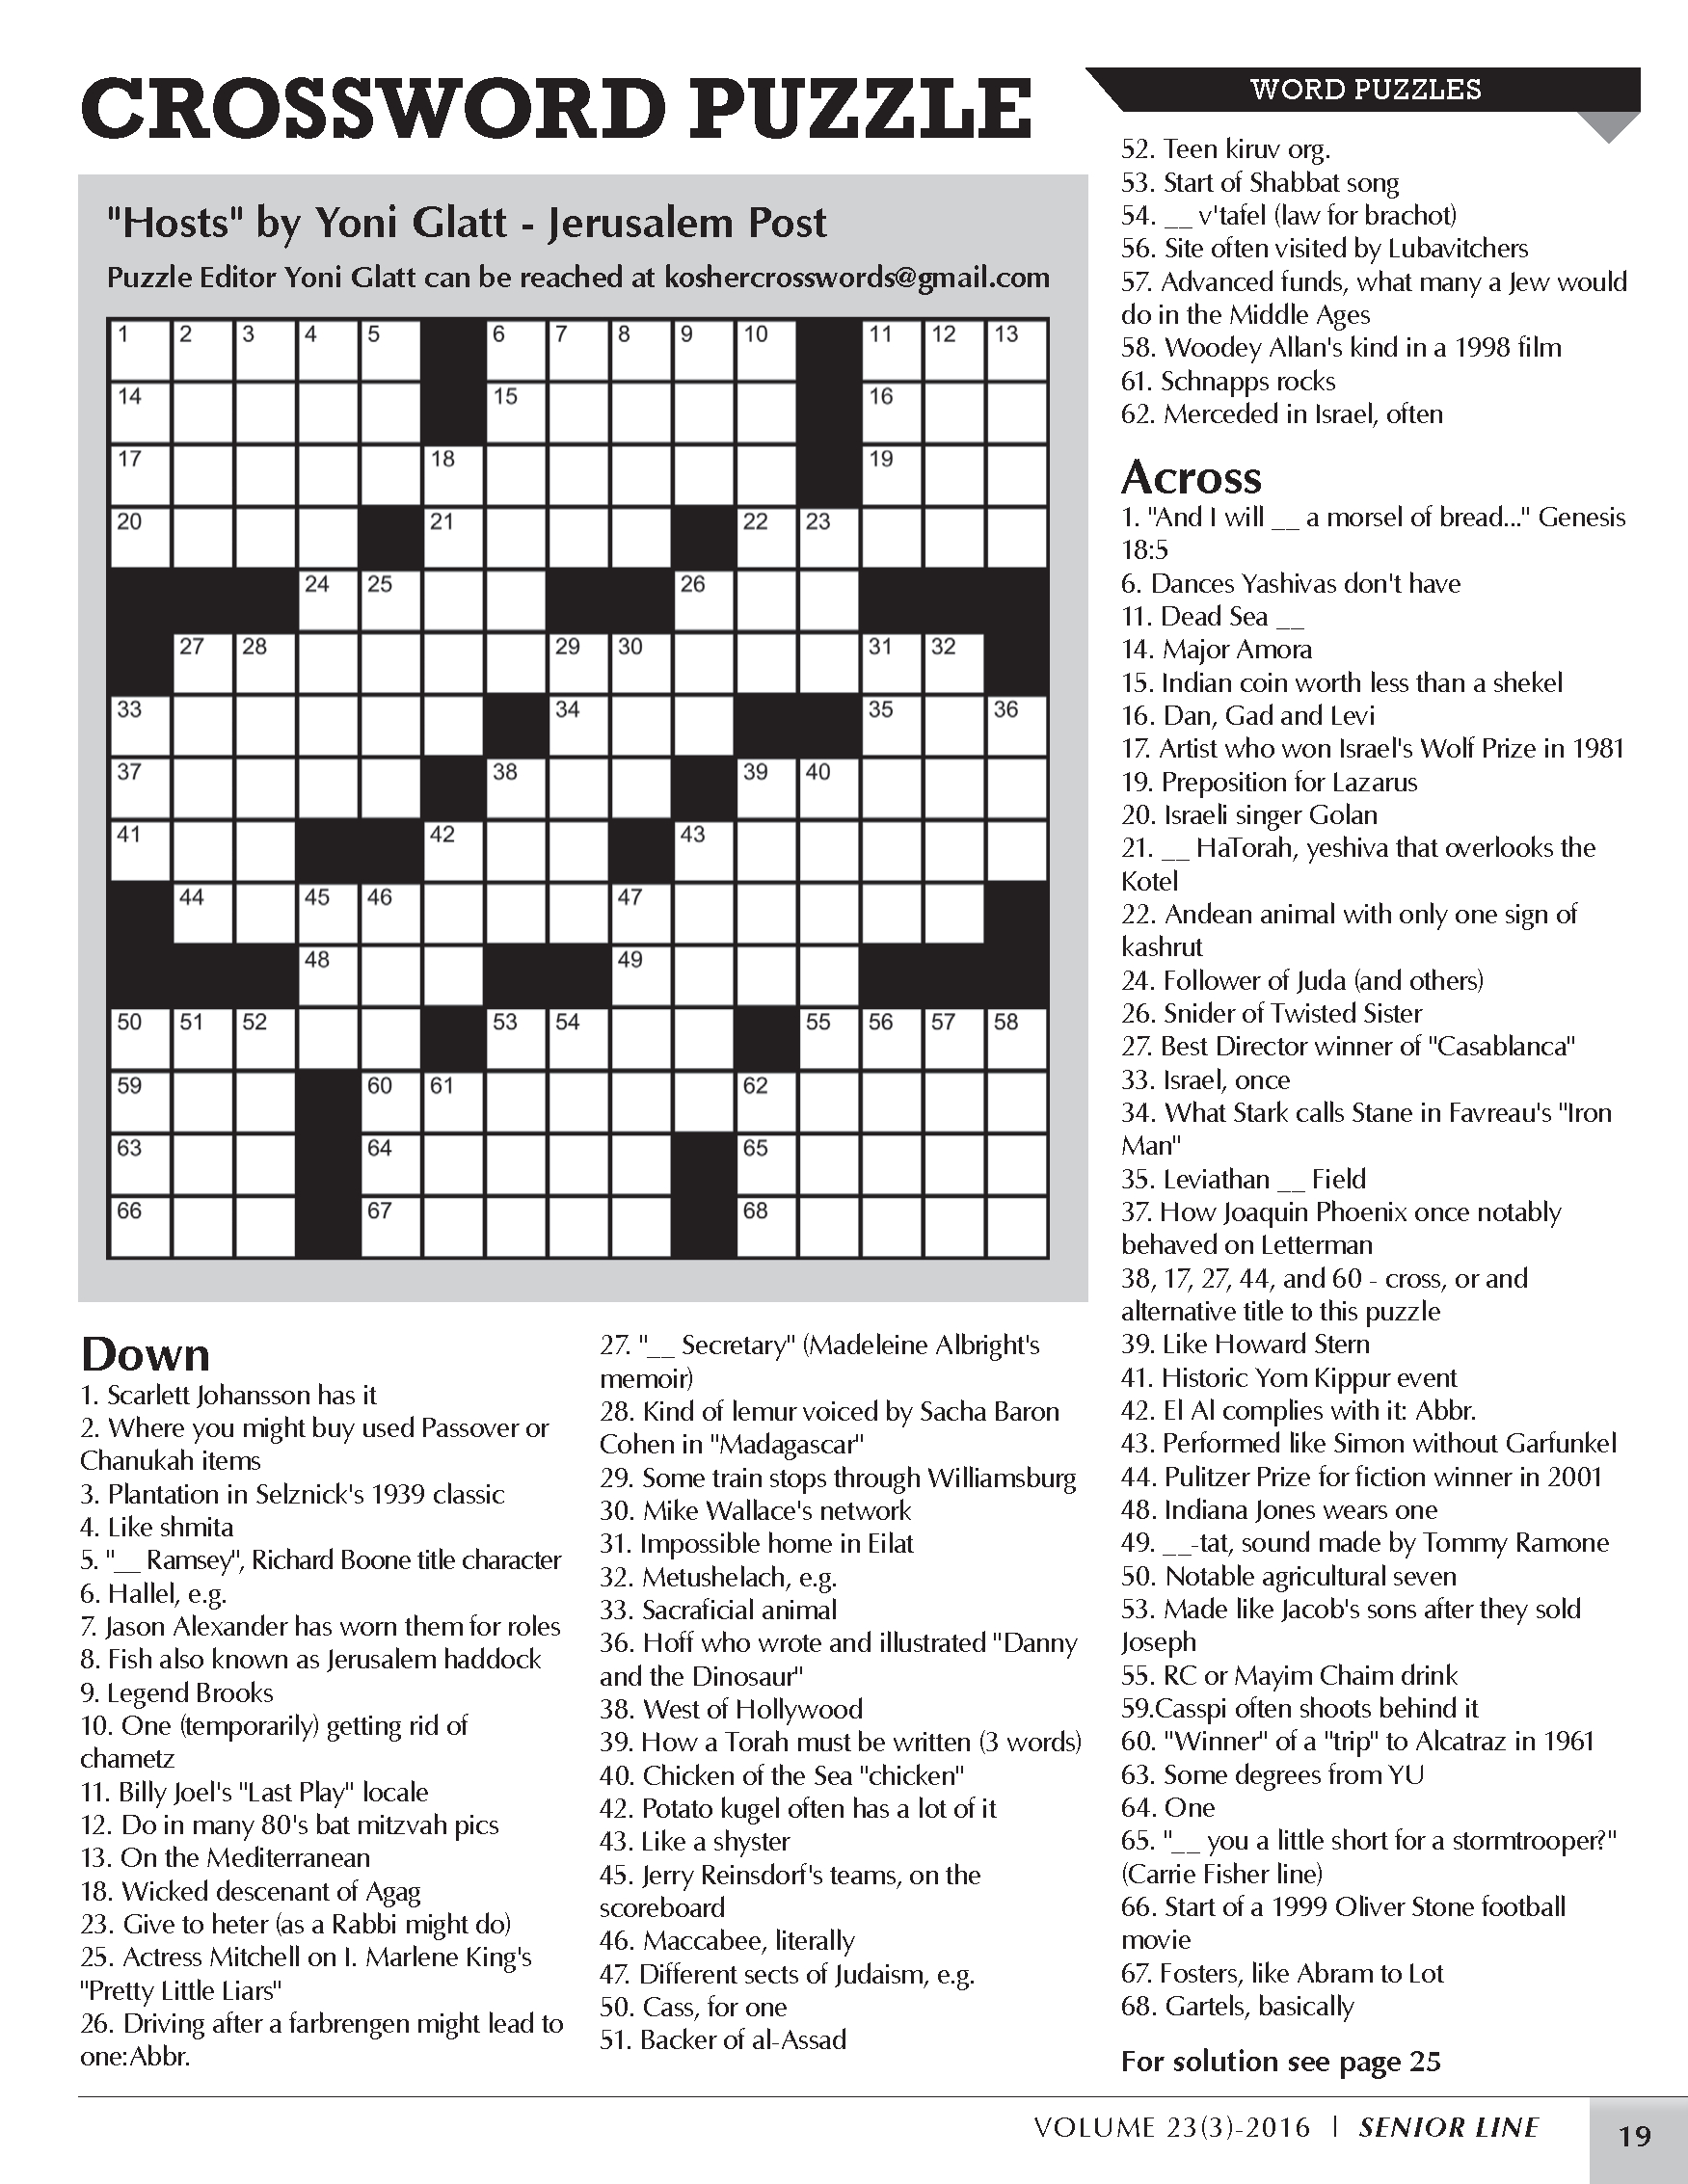 Crossword Puzzle To Test Your Vocabulary Skills - Jewish Seniors - Printable Crossword Puzzle Pdf